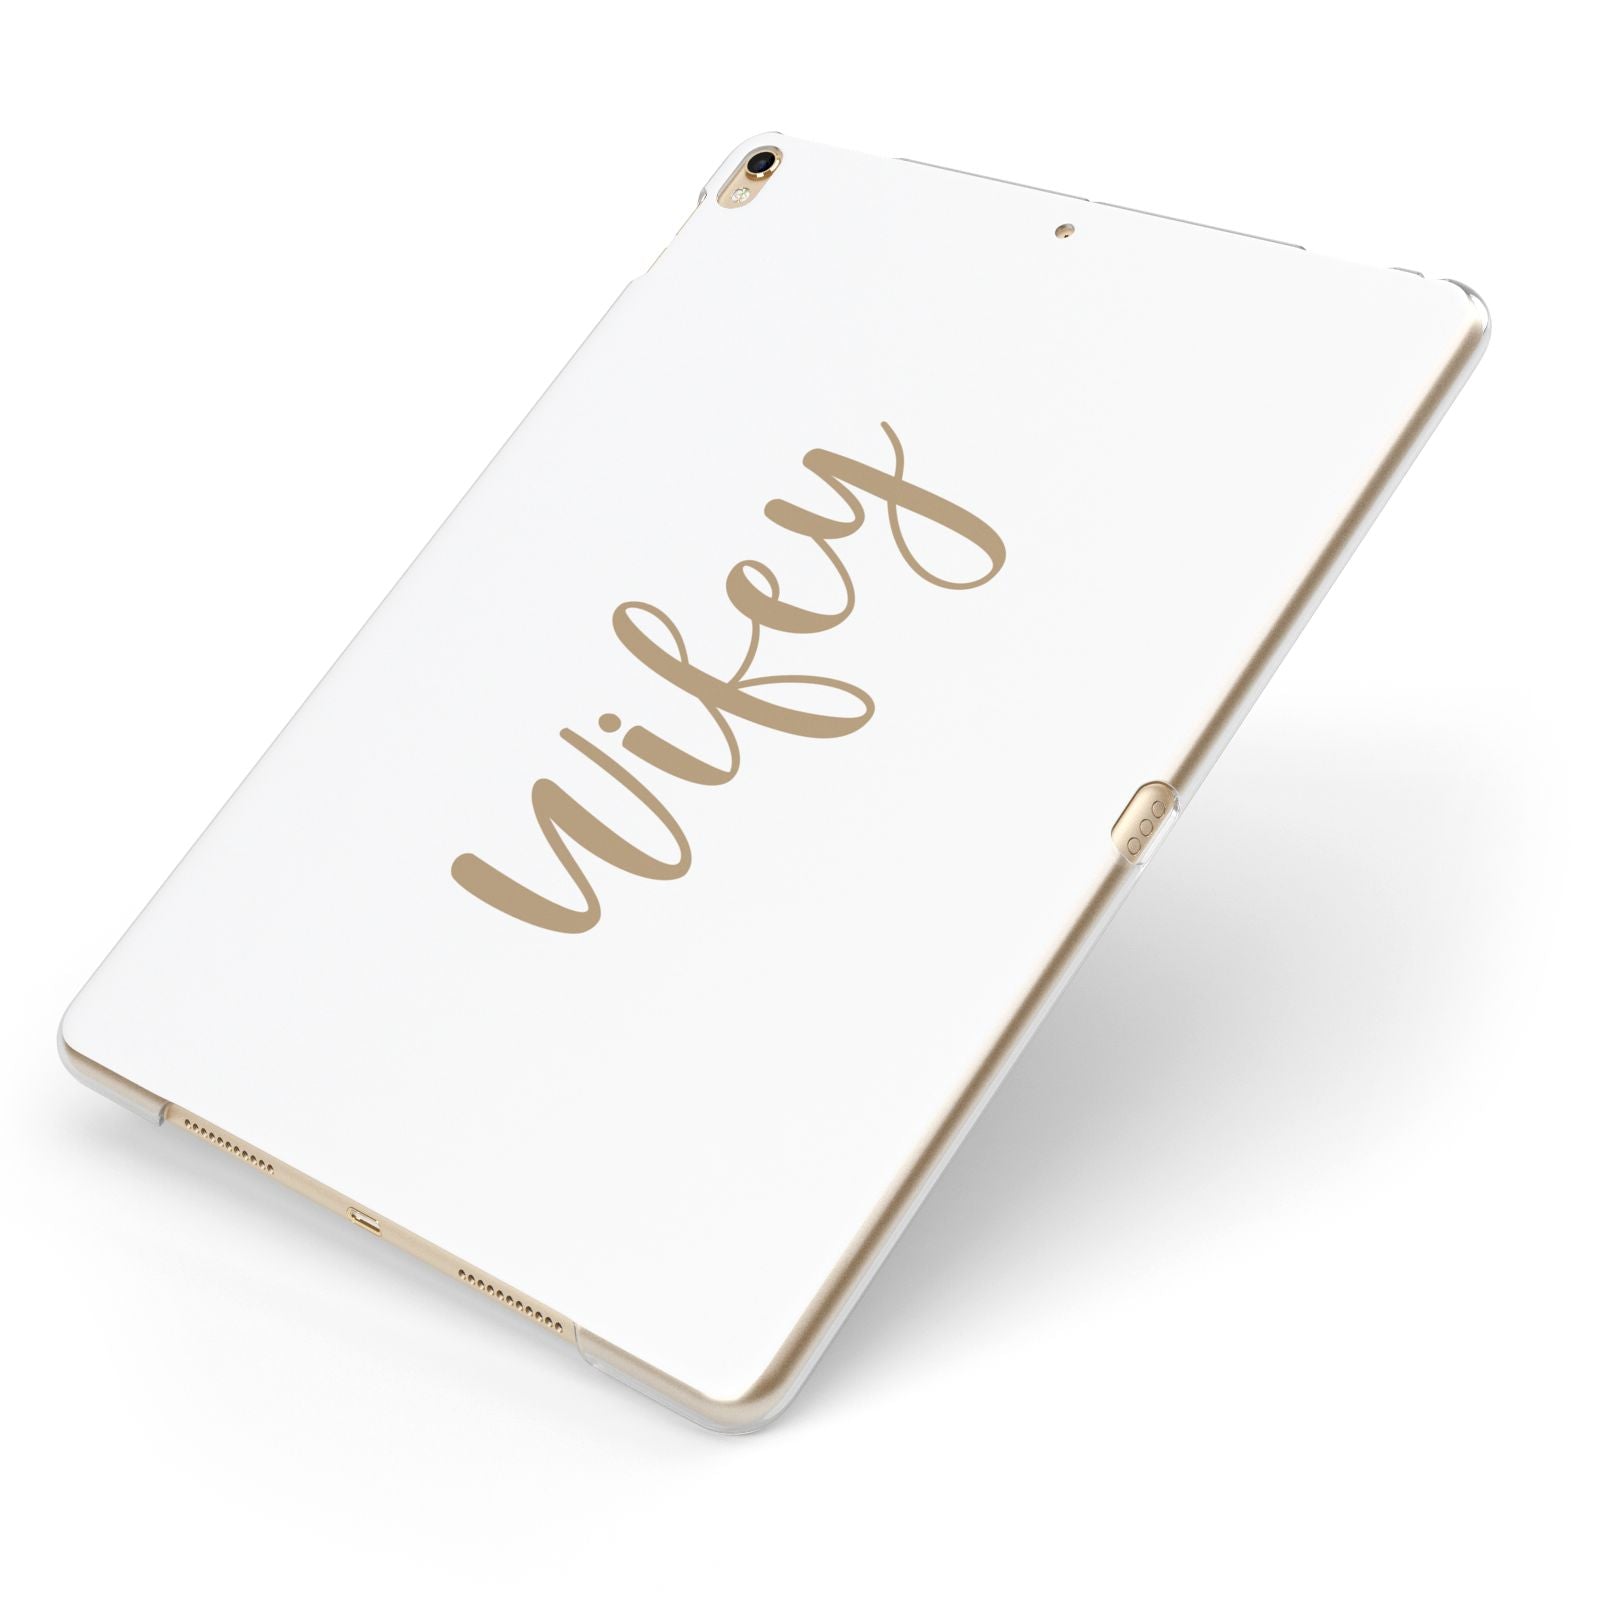 Wifey Apple iPad Case on Gold iPad Side View